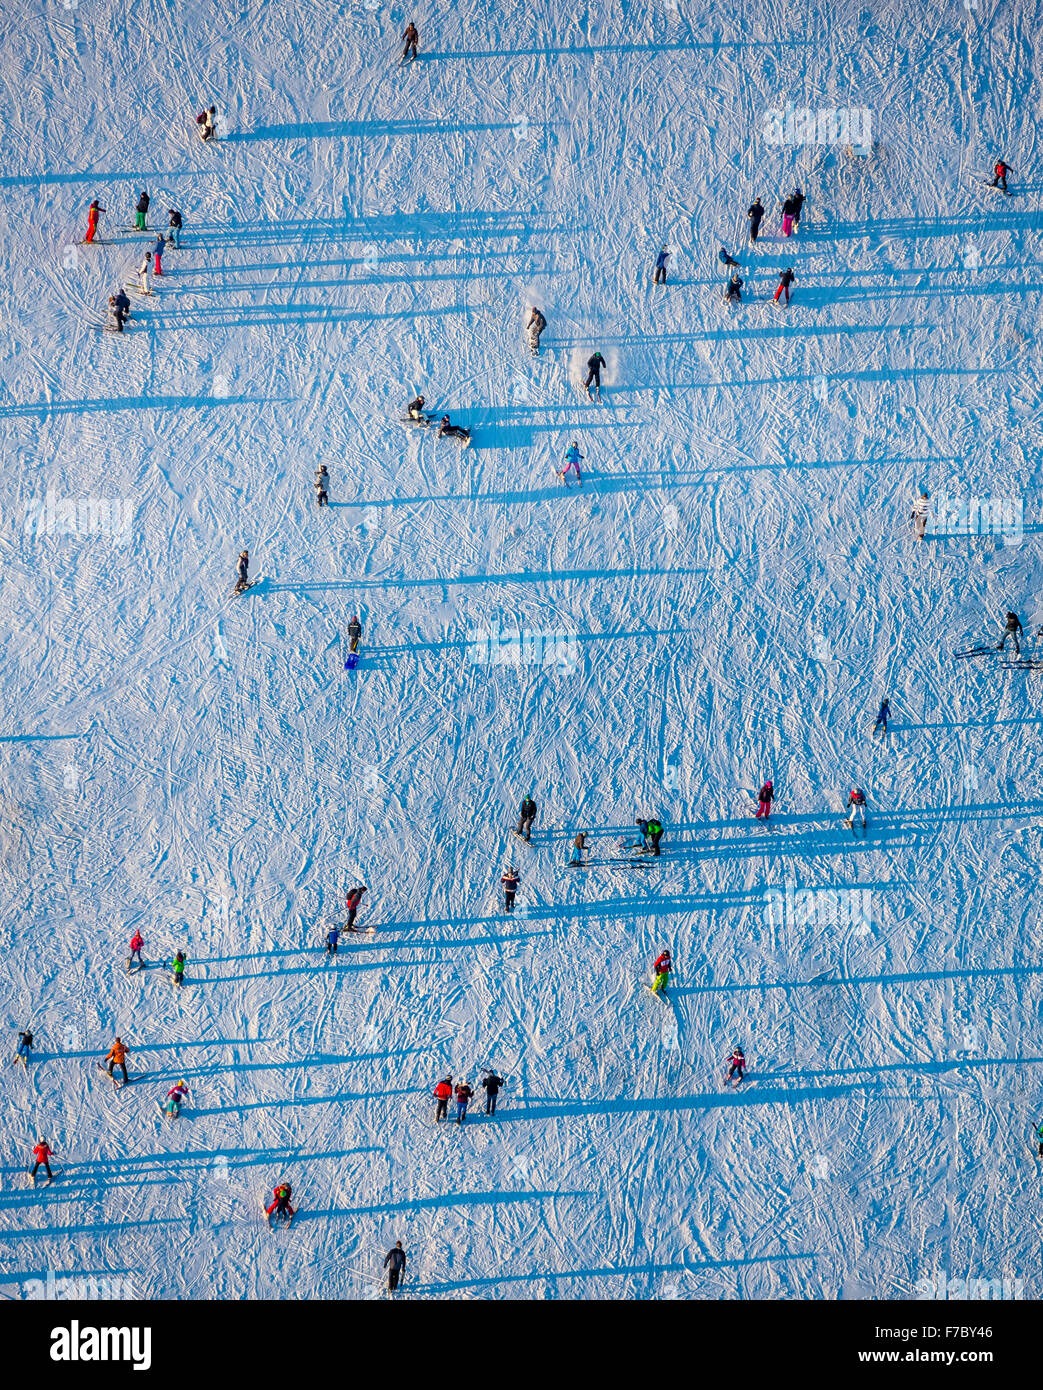 Skiers on ski lift, Winterberg, Hochsauerlandkreis, downhill skiing Nordrhein-Westfalen, Germany, Europe, Aerial view, Stock Photo